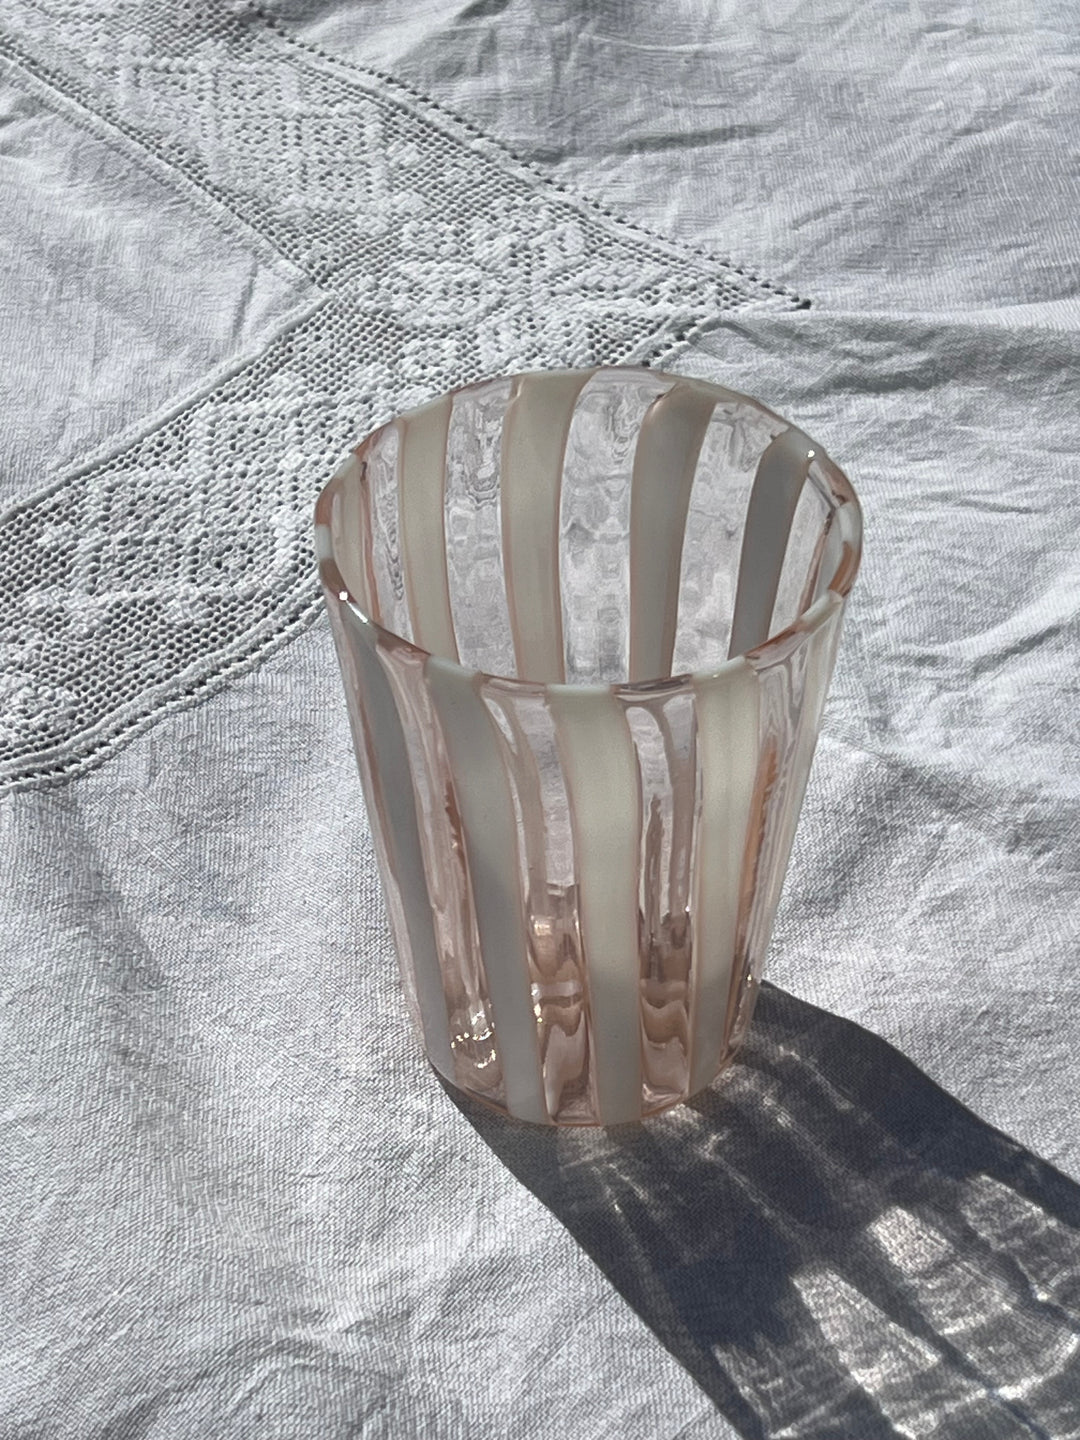 Håndblæst Murano Glas med Lys Pink og Hvide Striber Murano